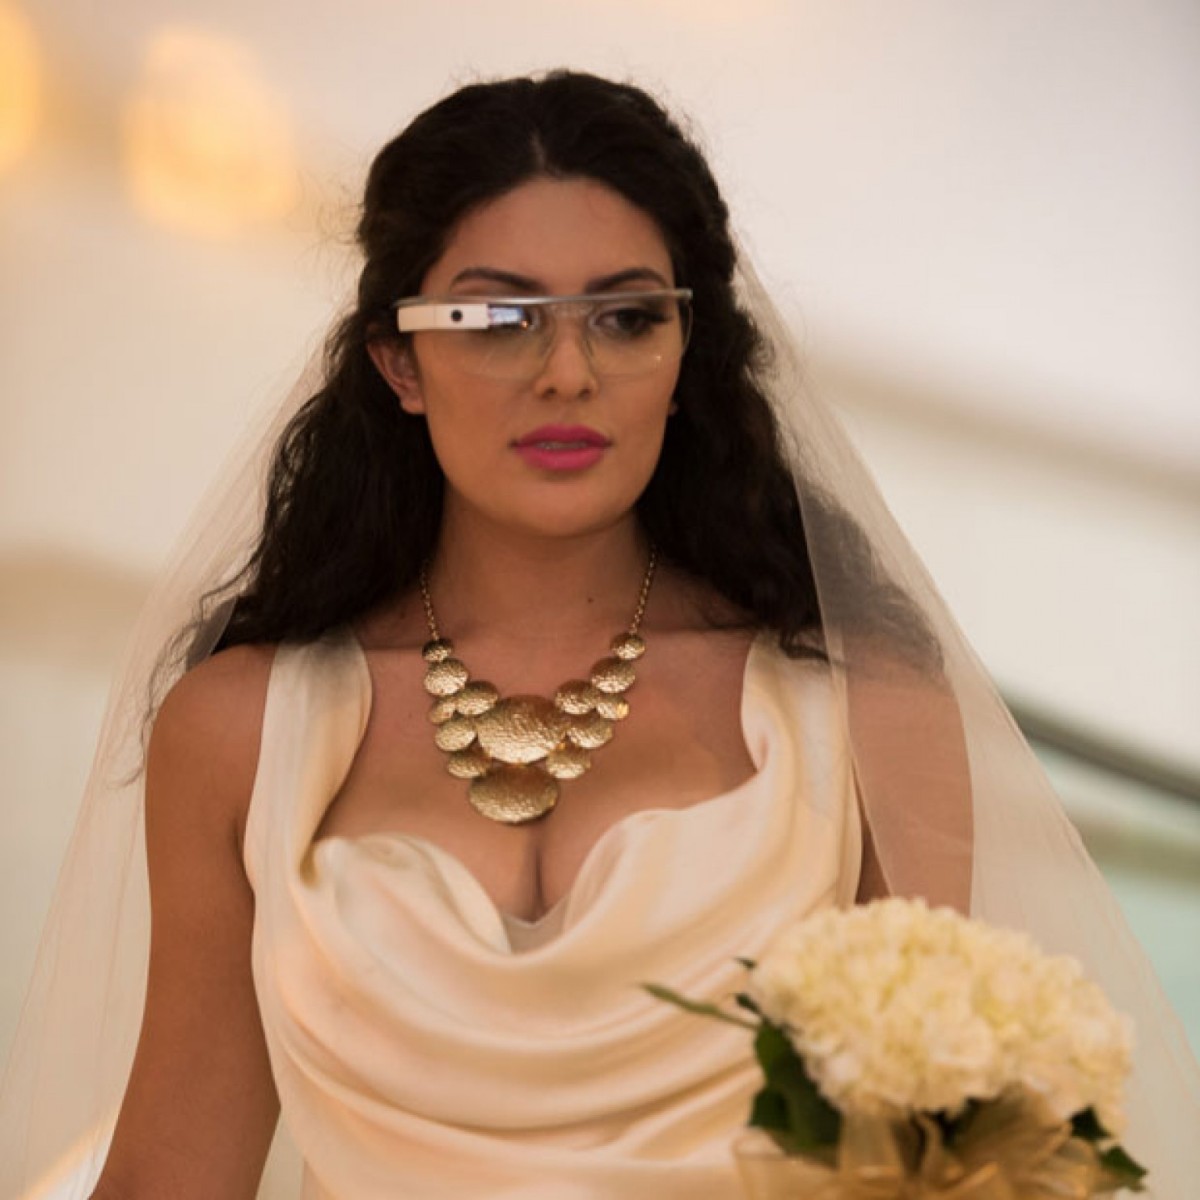 Do-Google-Glass-fit-the-bride